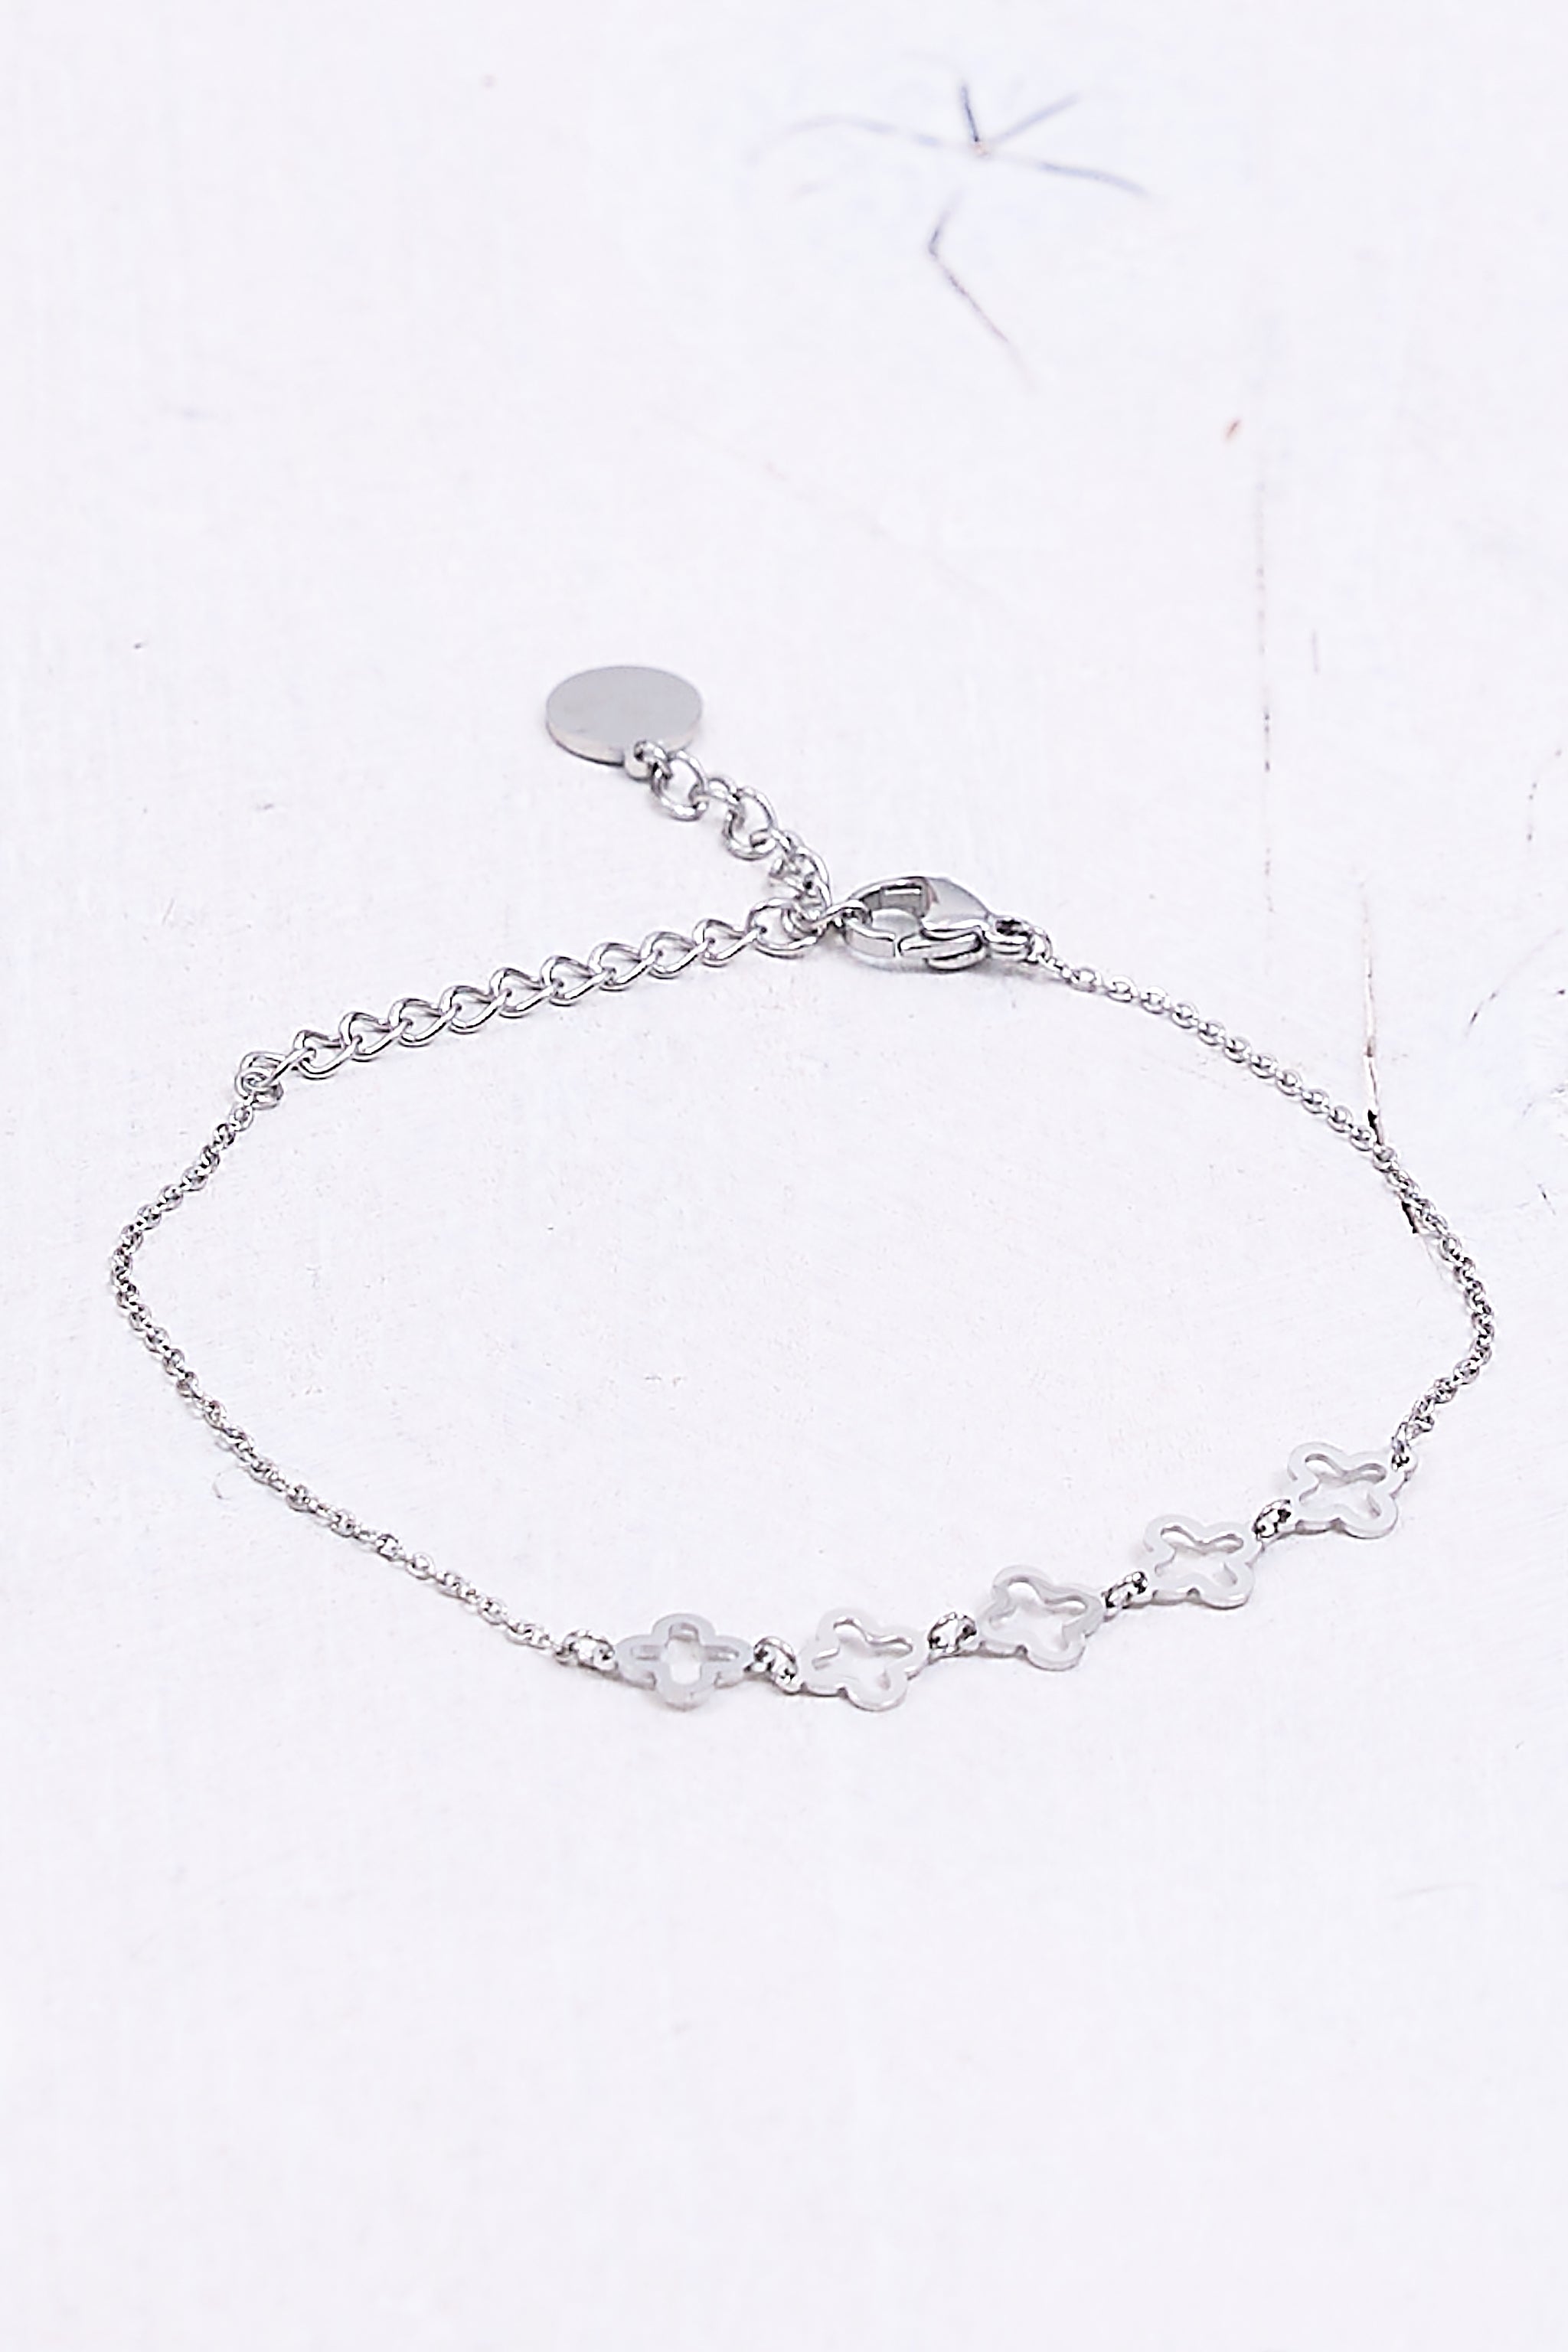 Bracelet with blossom, silver